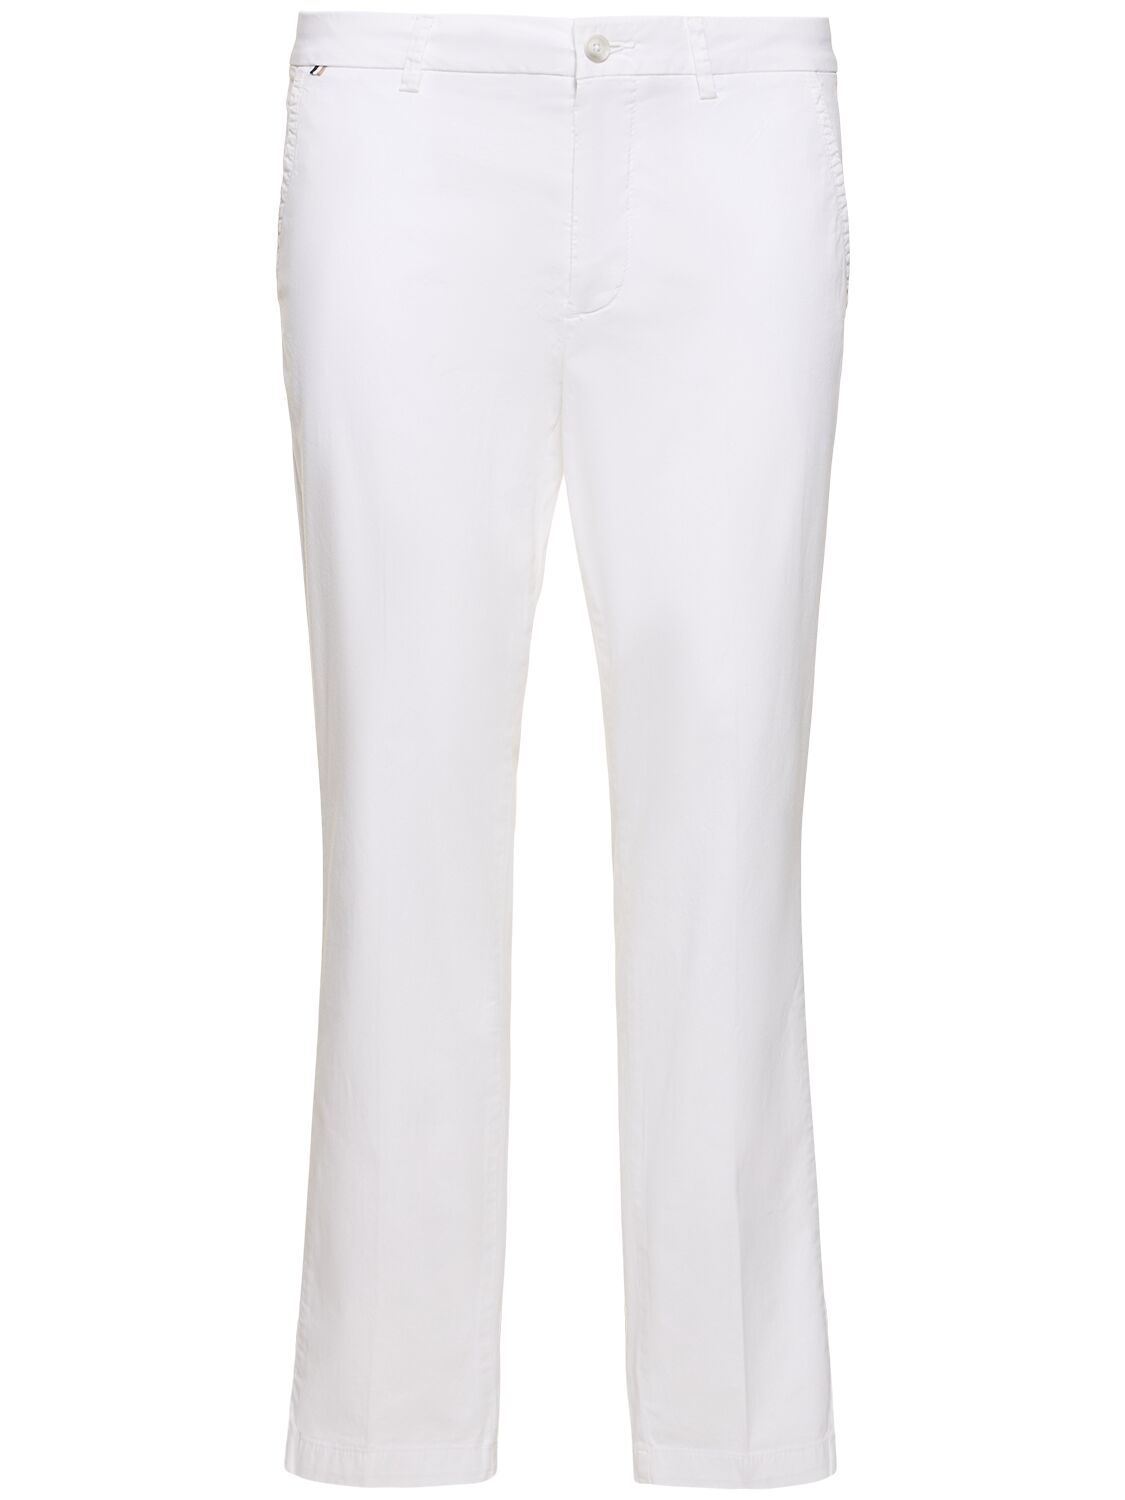 Hugo Boss Kaiton Stretch Cotton Trousers In White